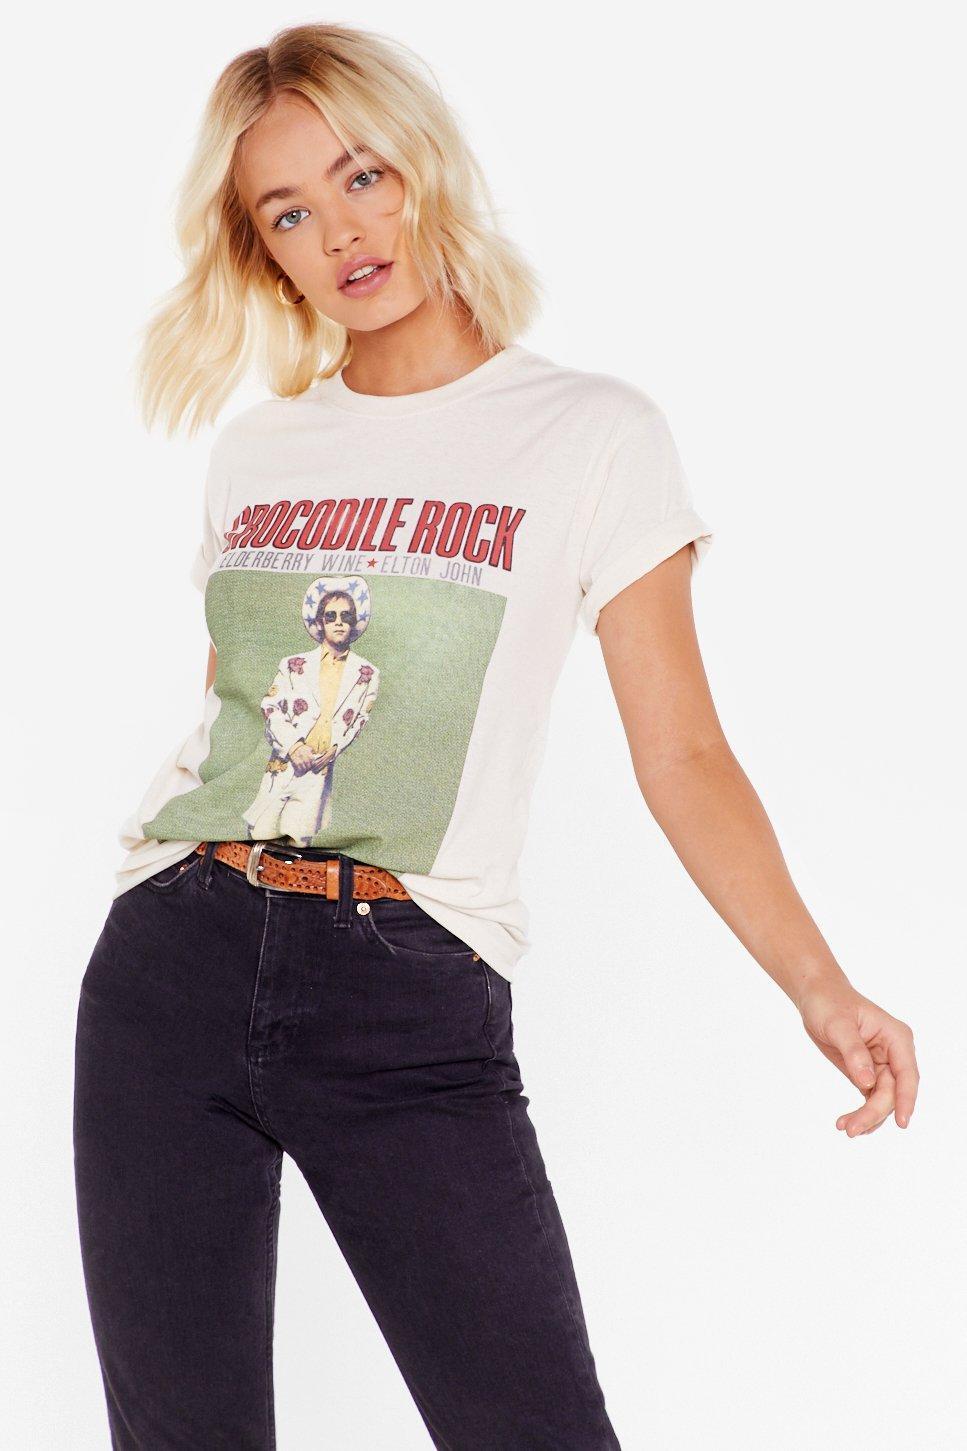 Nasty Gal Crocodile Rock Elton John Graphic Band T-shirt - Lyst